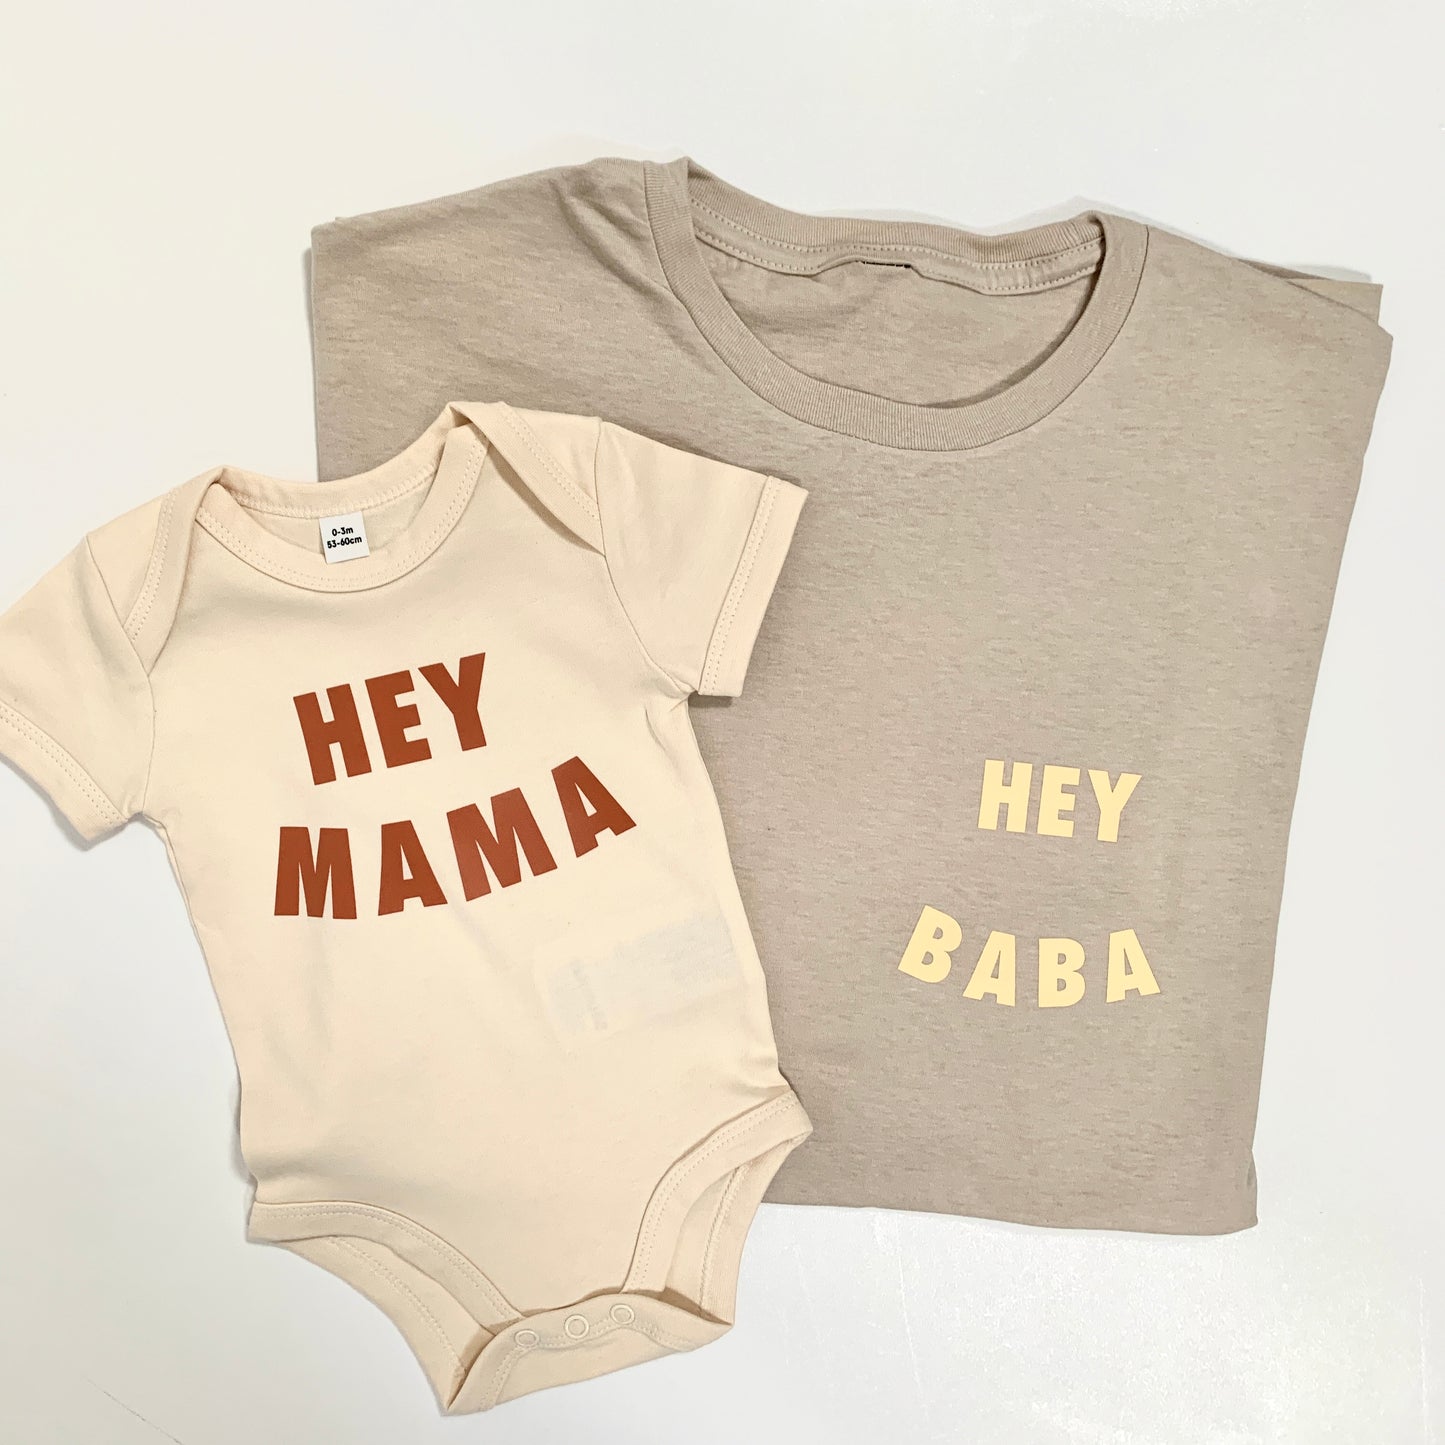 HEY BABA Mama T-Shirt